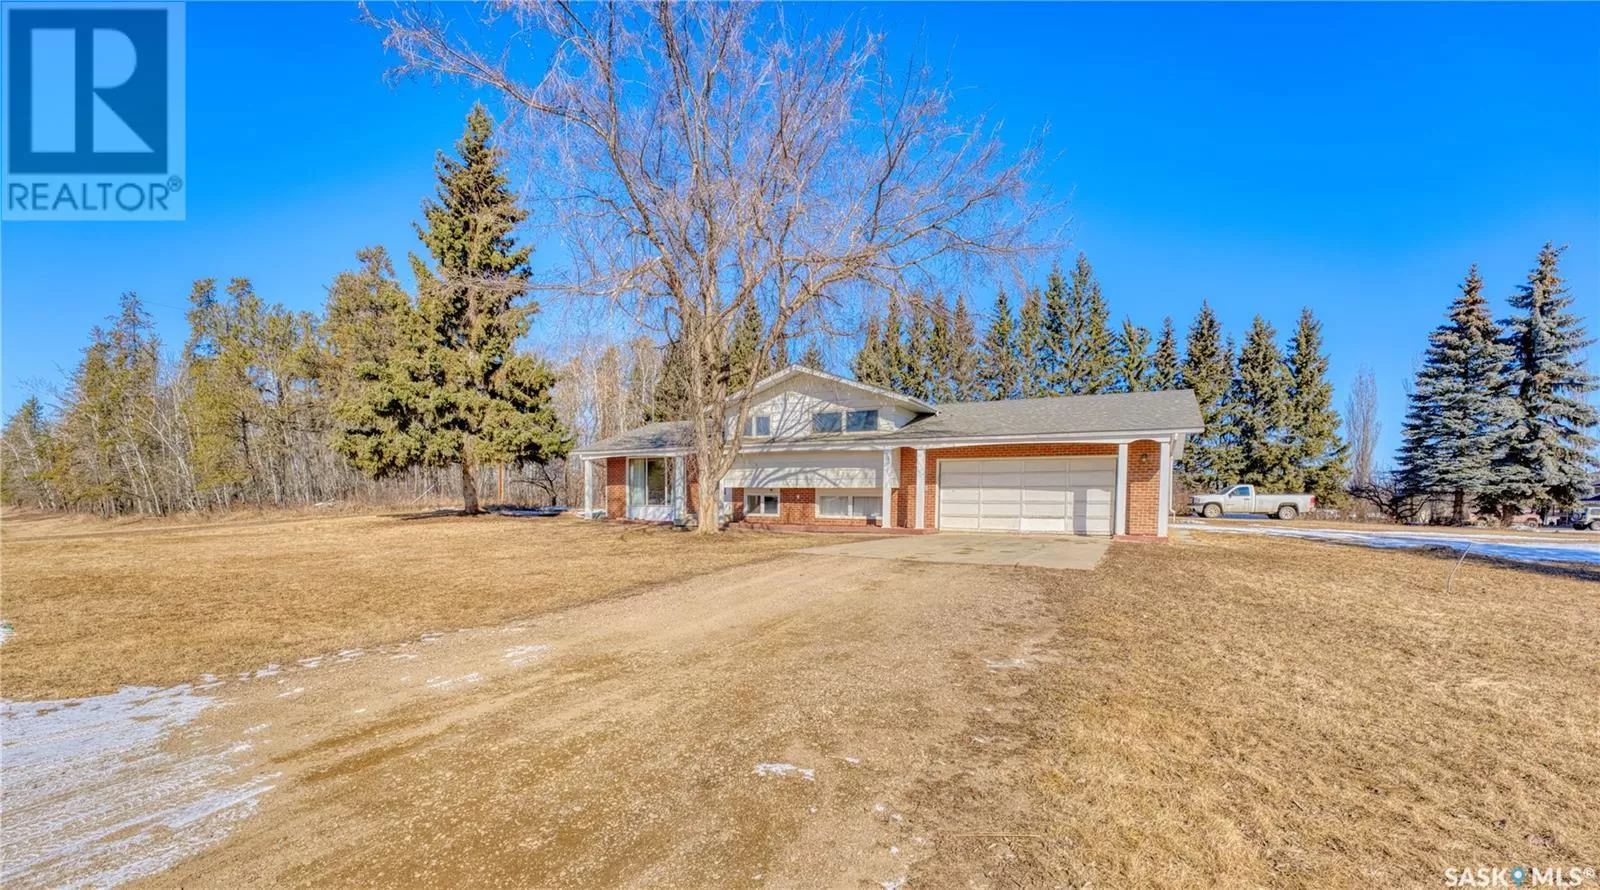 House for rent: 117 2nd Street W, Pierceland, Saskatchewan S0M 2K0